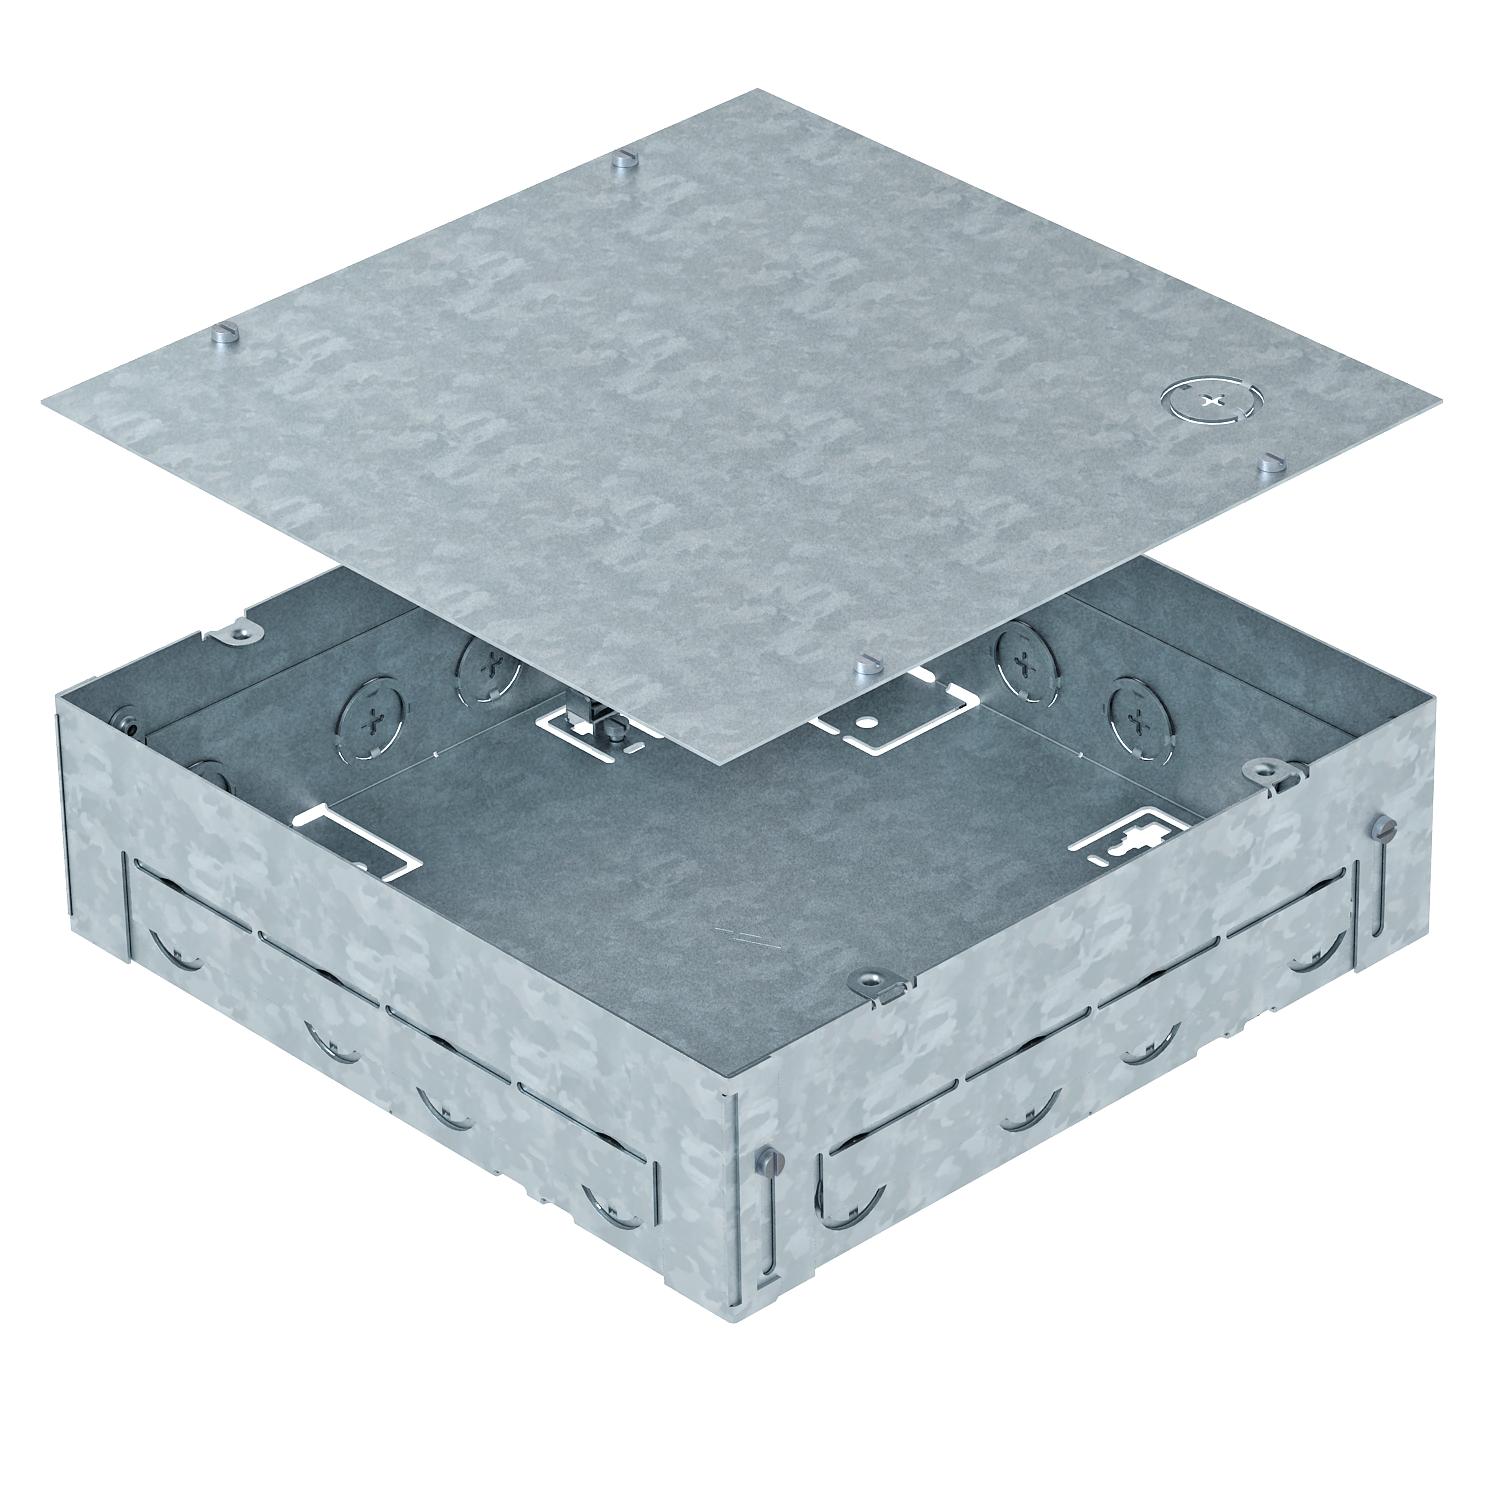 Zementu - Sujeta libros de cemento Medidas: 19 cm alto x